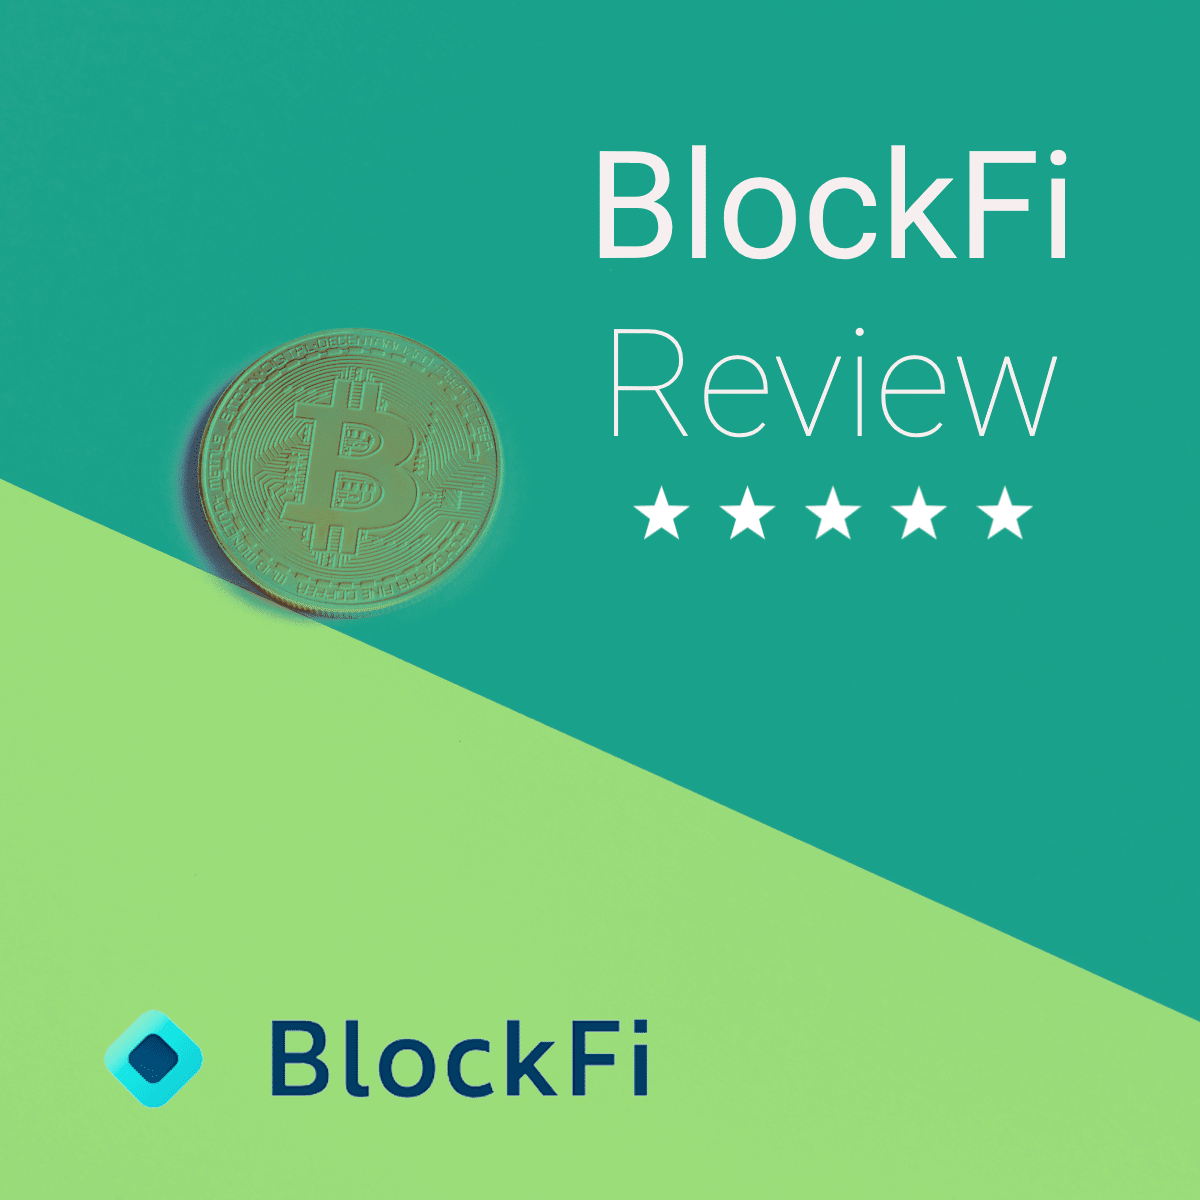 BlockFi Review | CryptoLendingAdvice.com